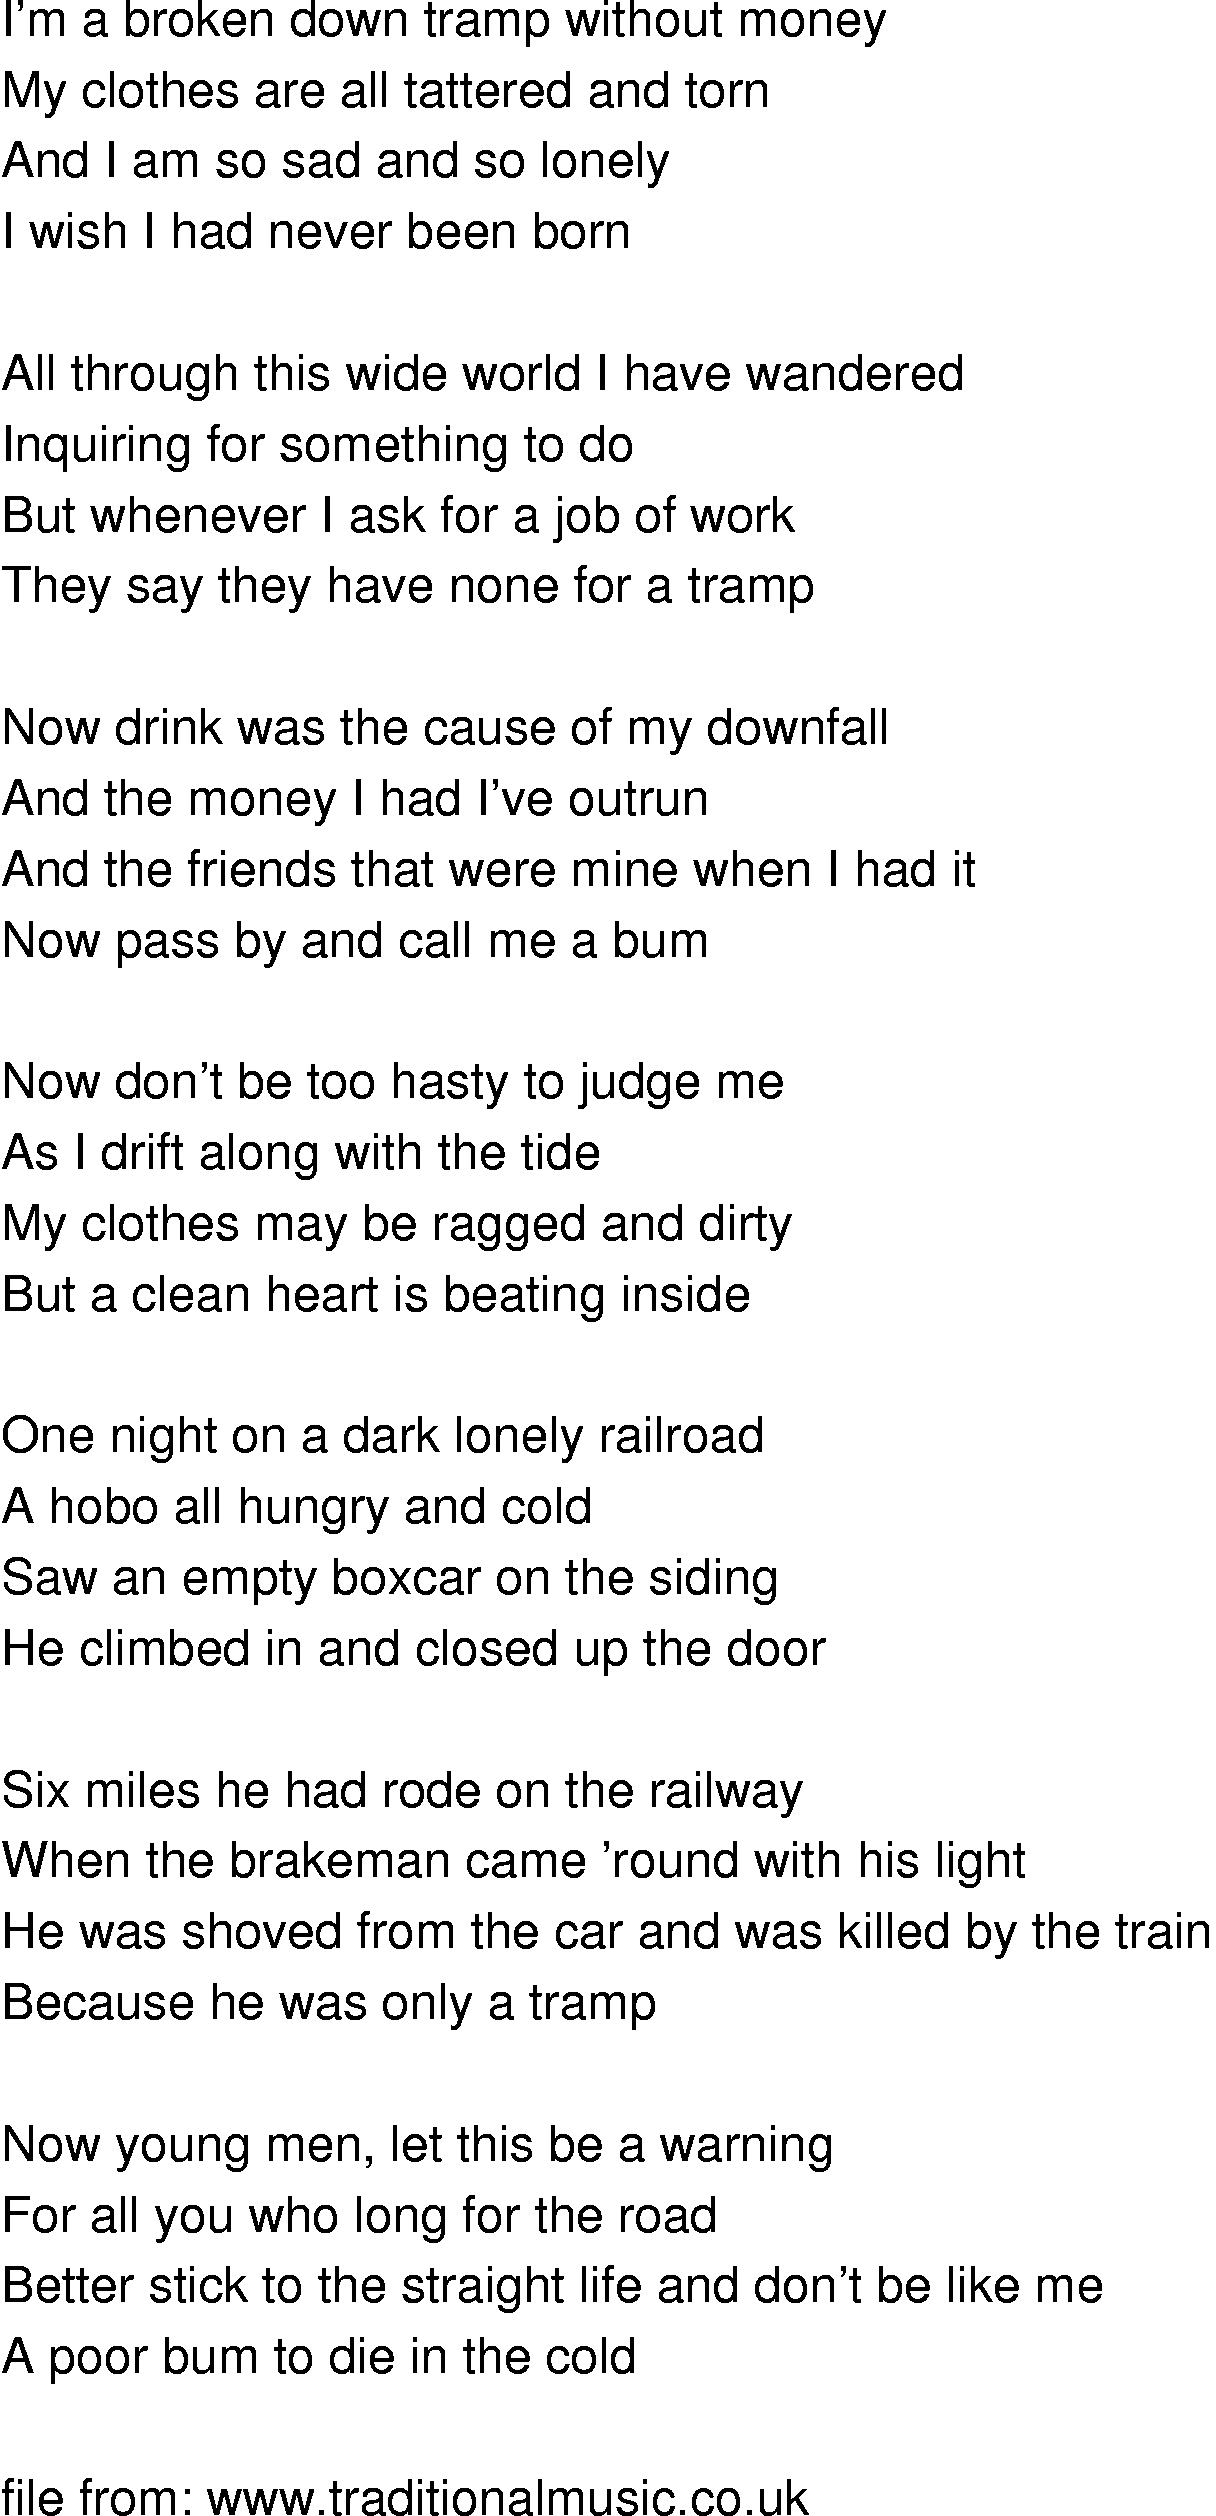 Old-Time (oldtimey) Song Lyrics - broken down tramp